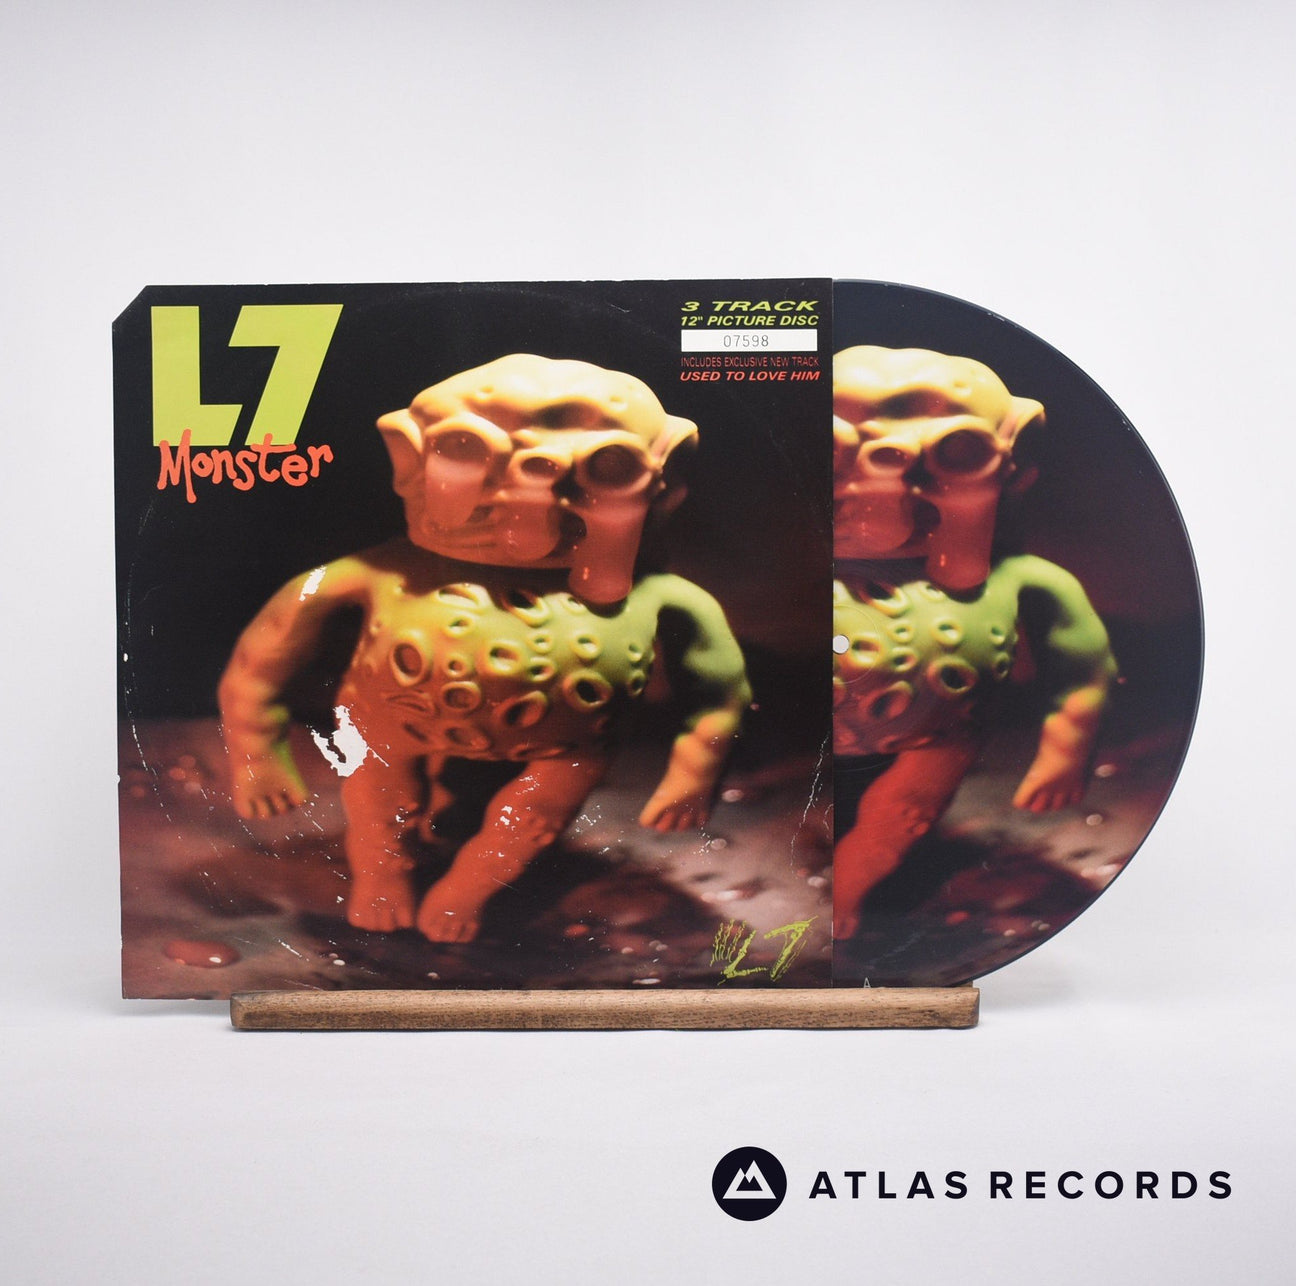 L7 Monster 12" Vinyl Record - In Sleeve